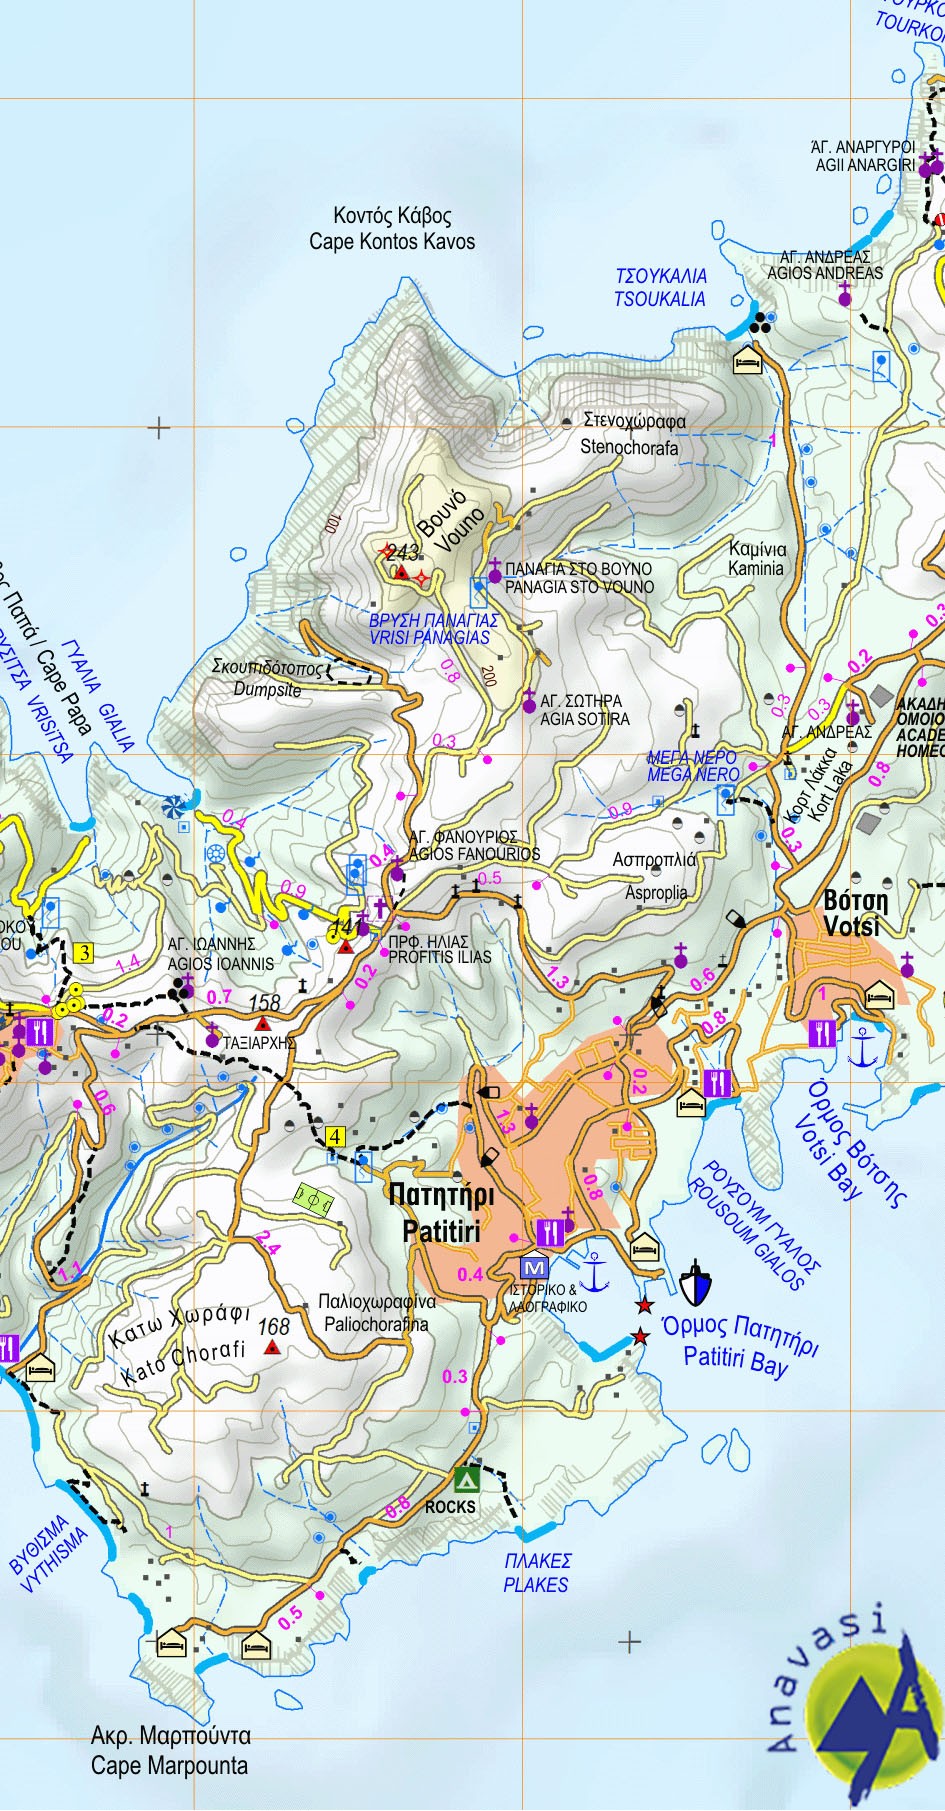 Alonnisos • Hiking map 1:30 000